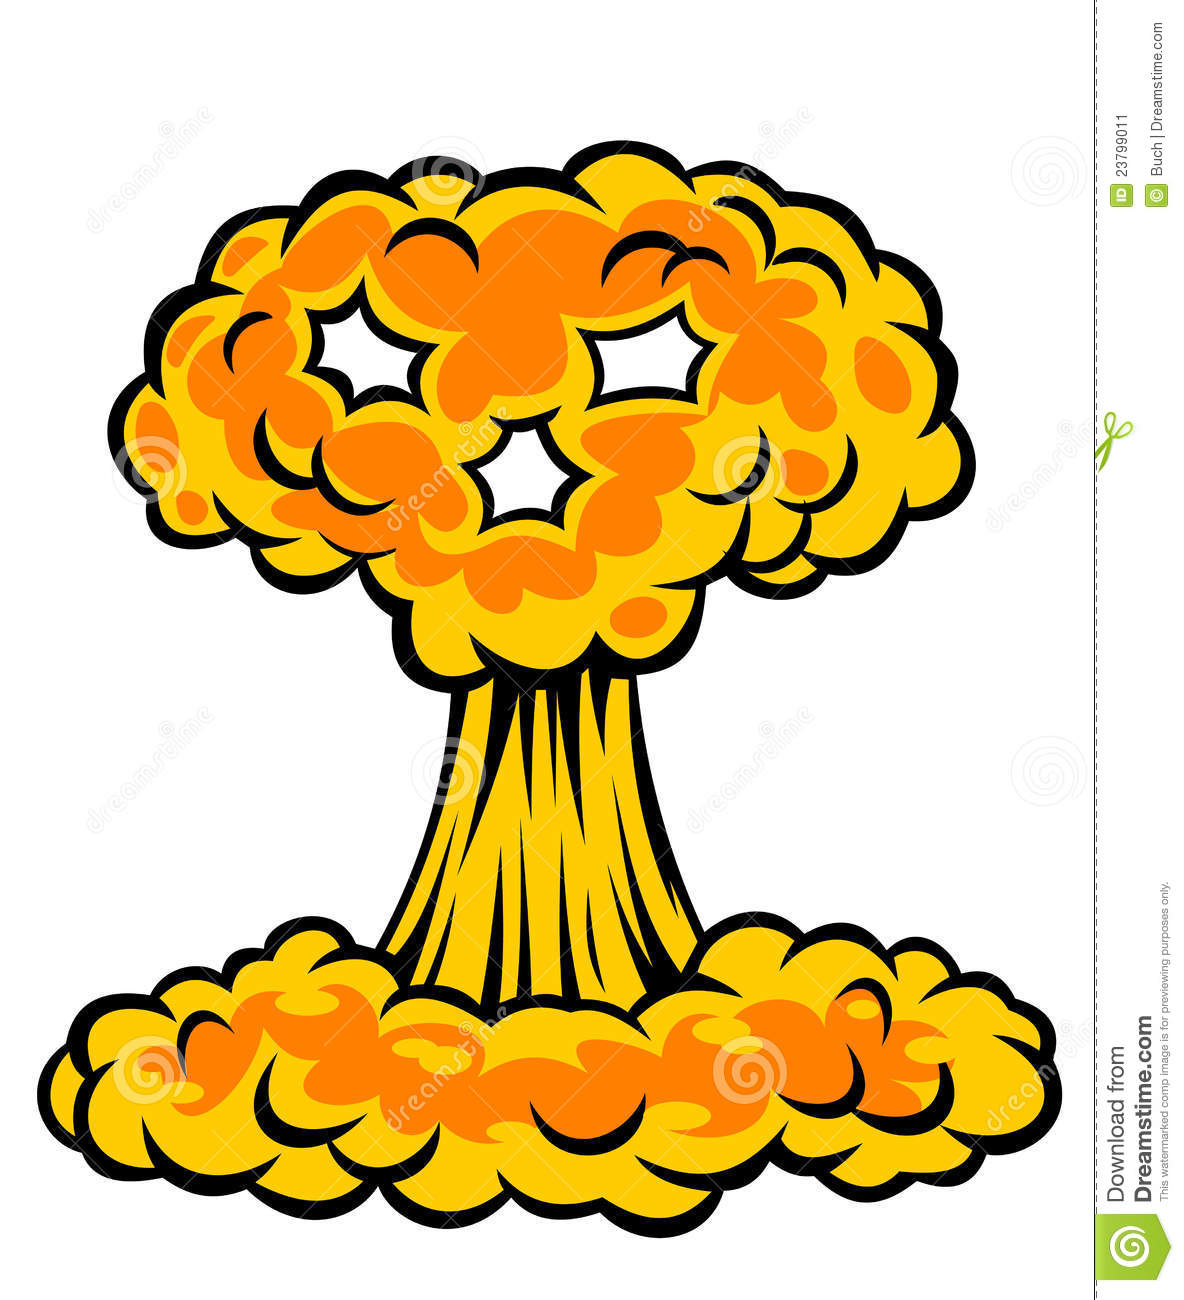 clipart explosion nuclear warhead